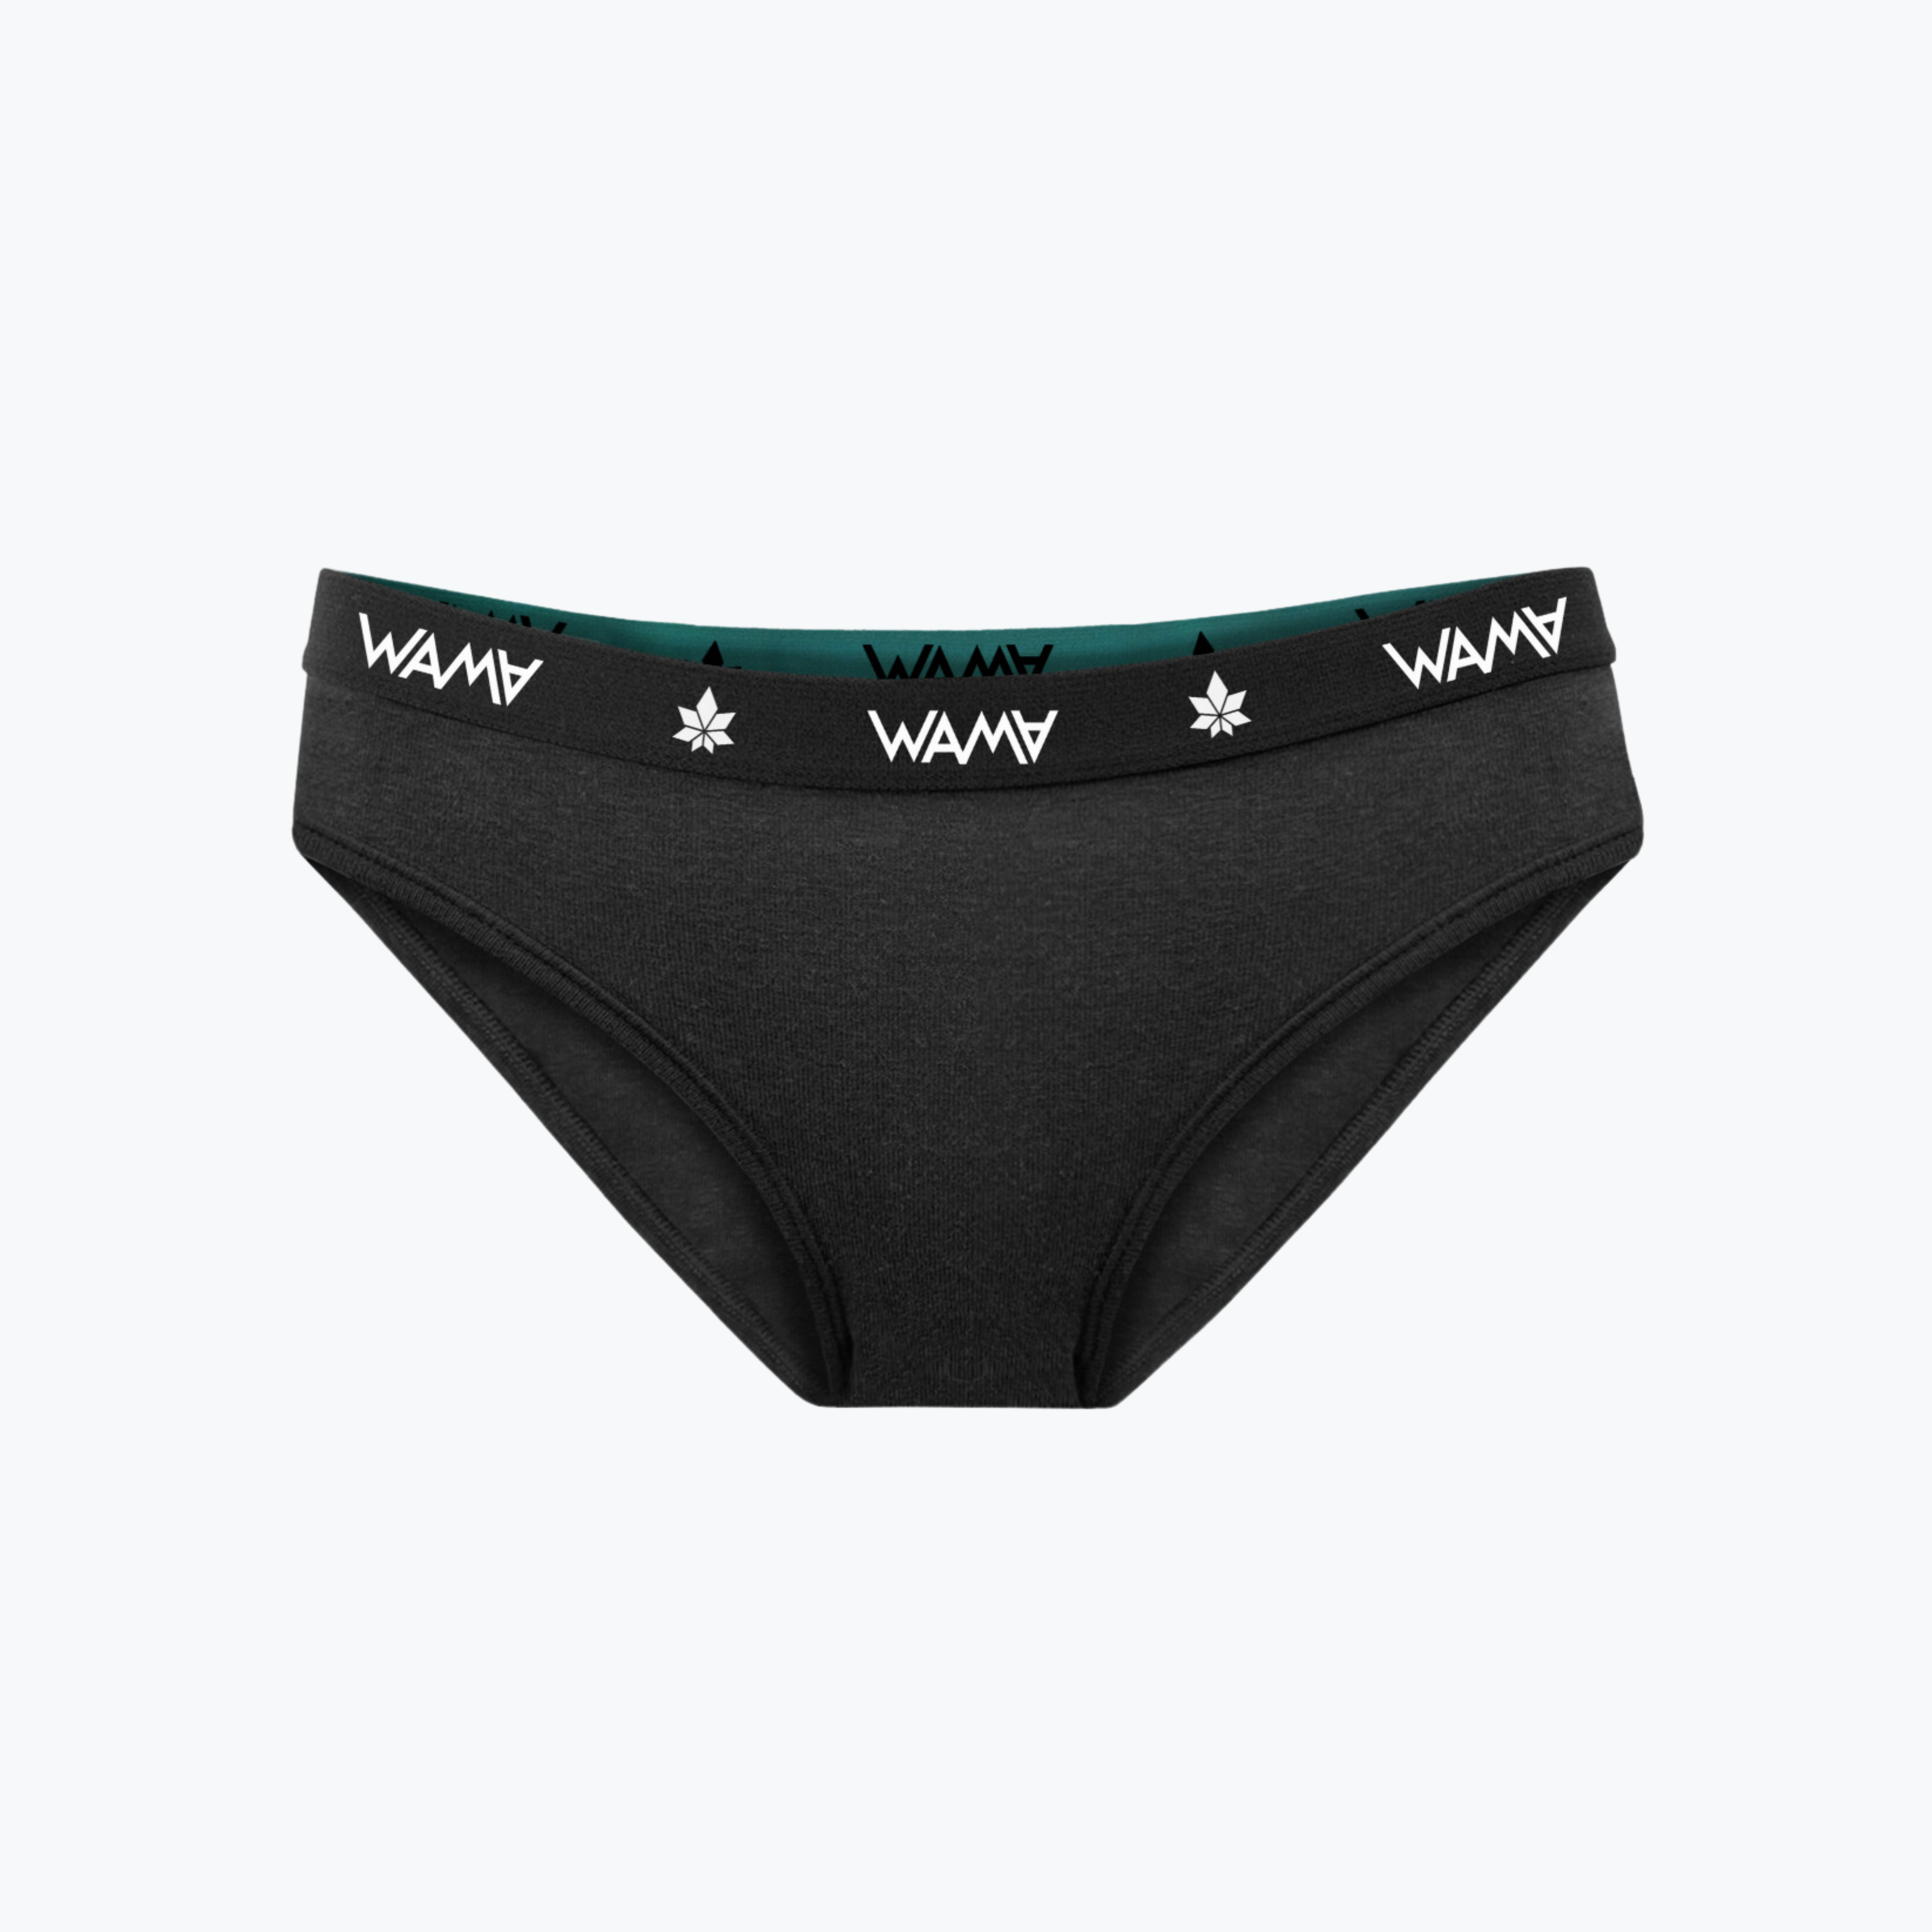 WAMA Underwear - If It's Vegan, It's On Vkind!